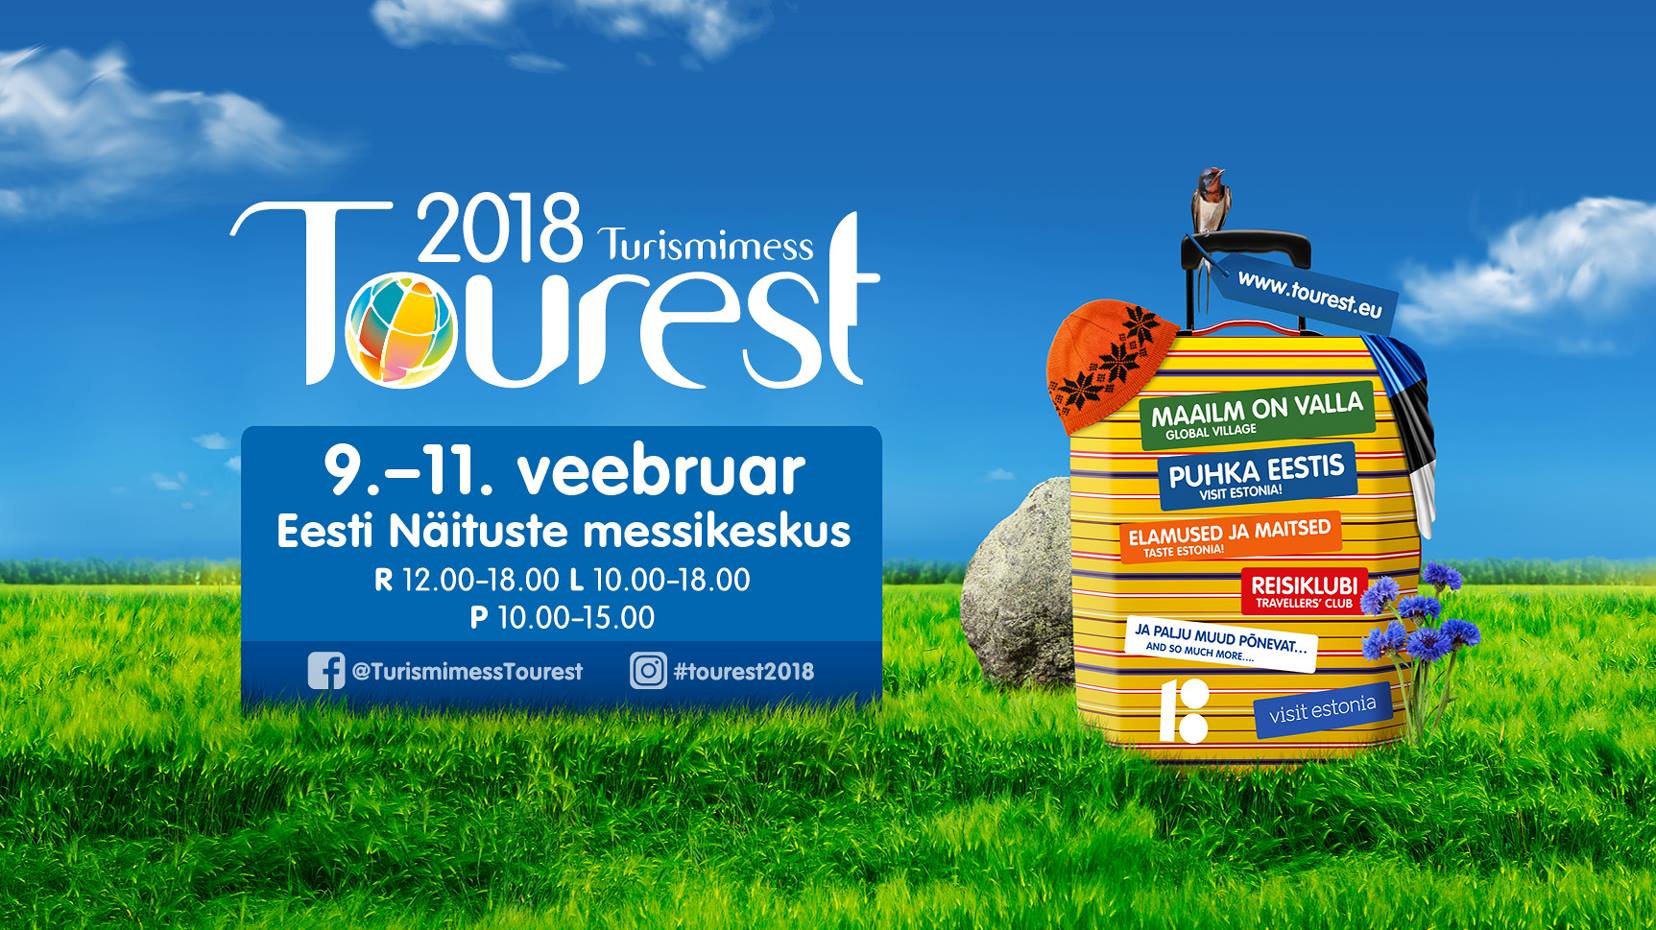 Ярмарка Tourest 2018 посвящена туризму по Эстонии